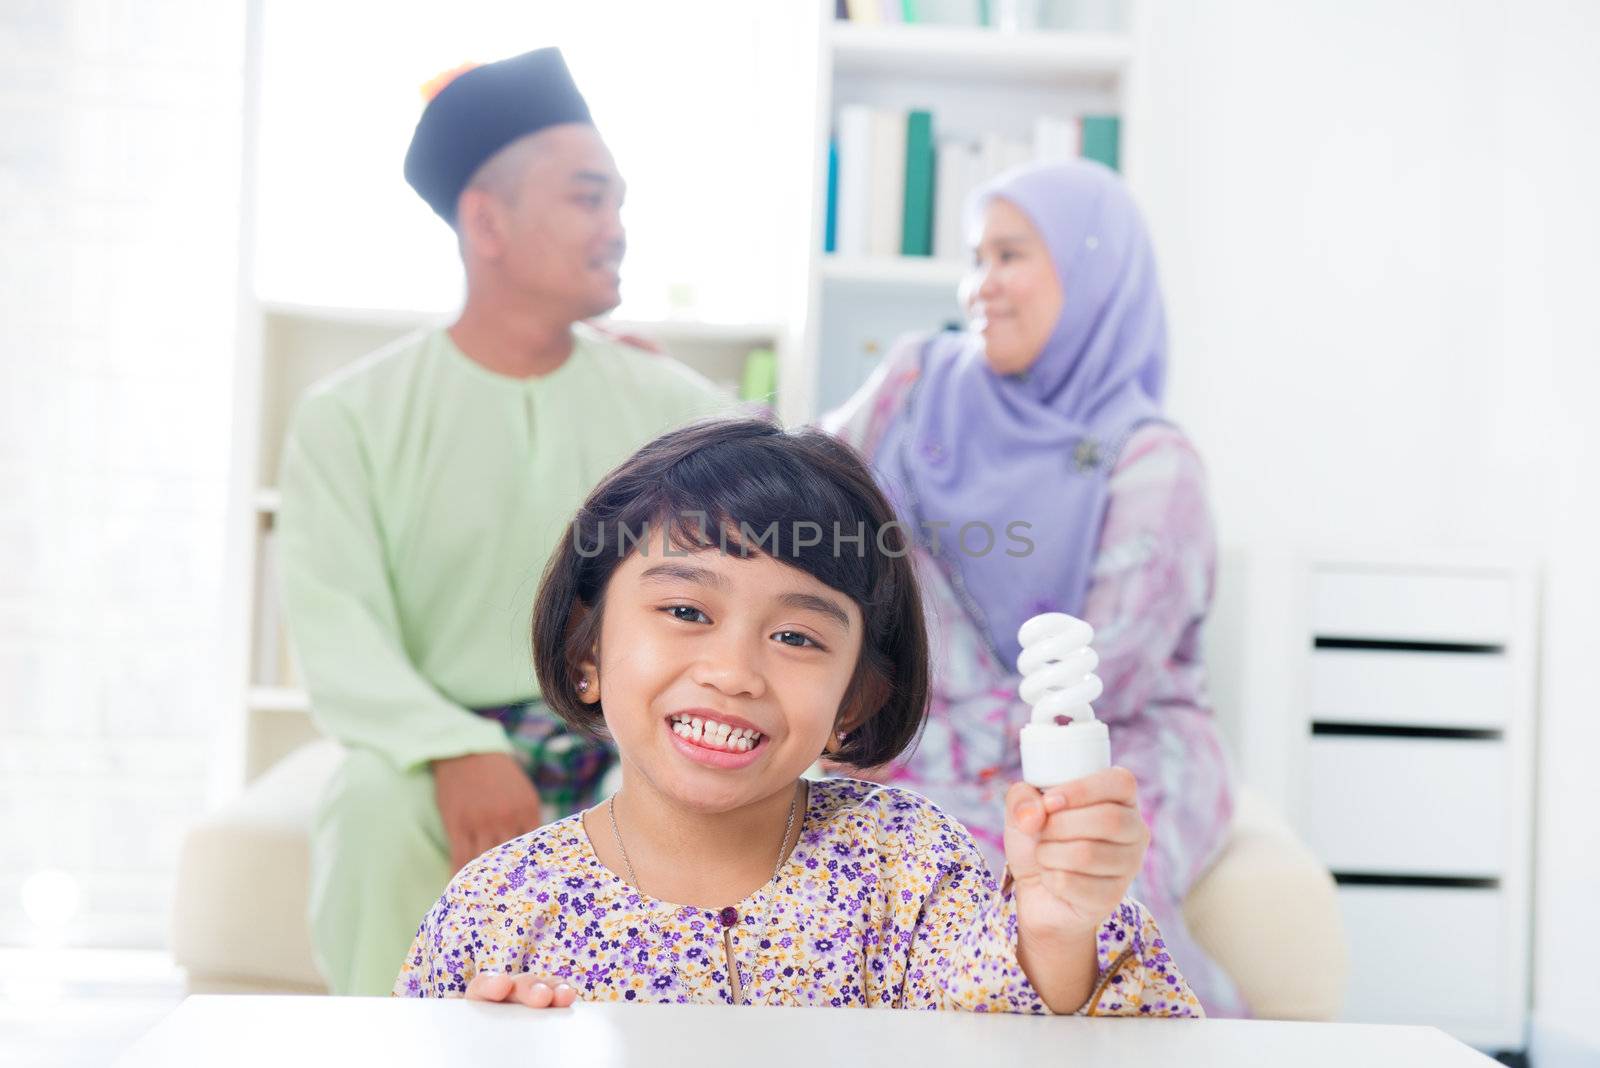 Muslim Southeast Asian girl lightbulb idea concept.